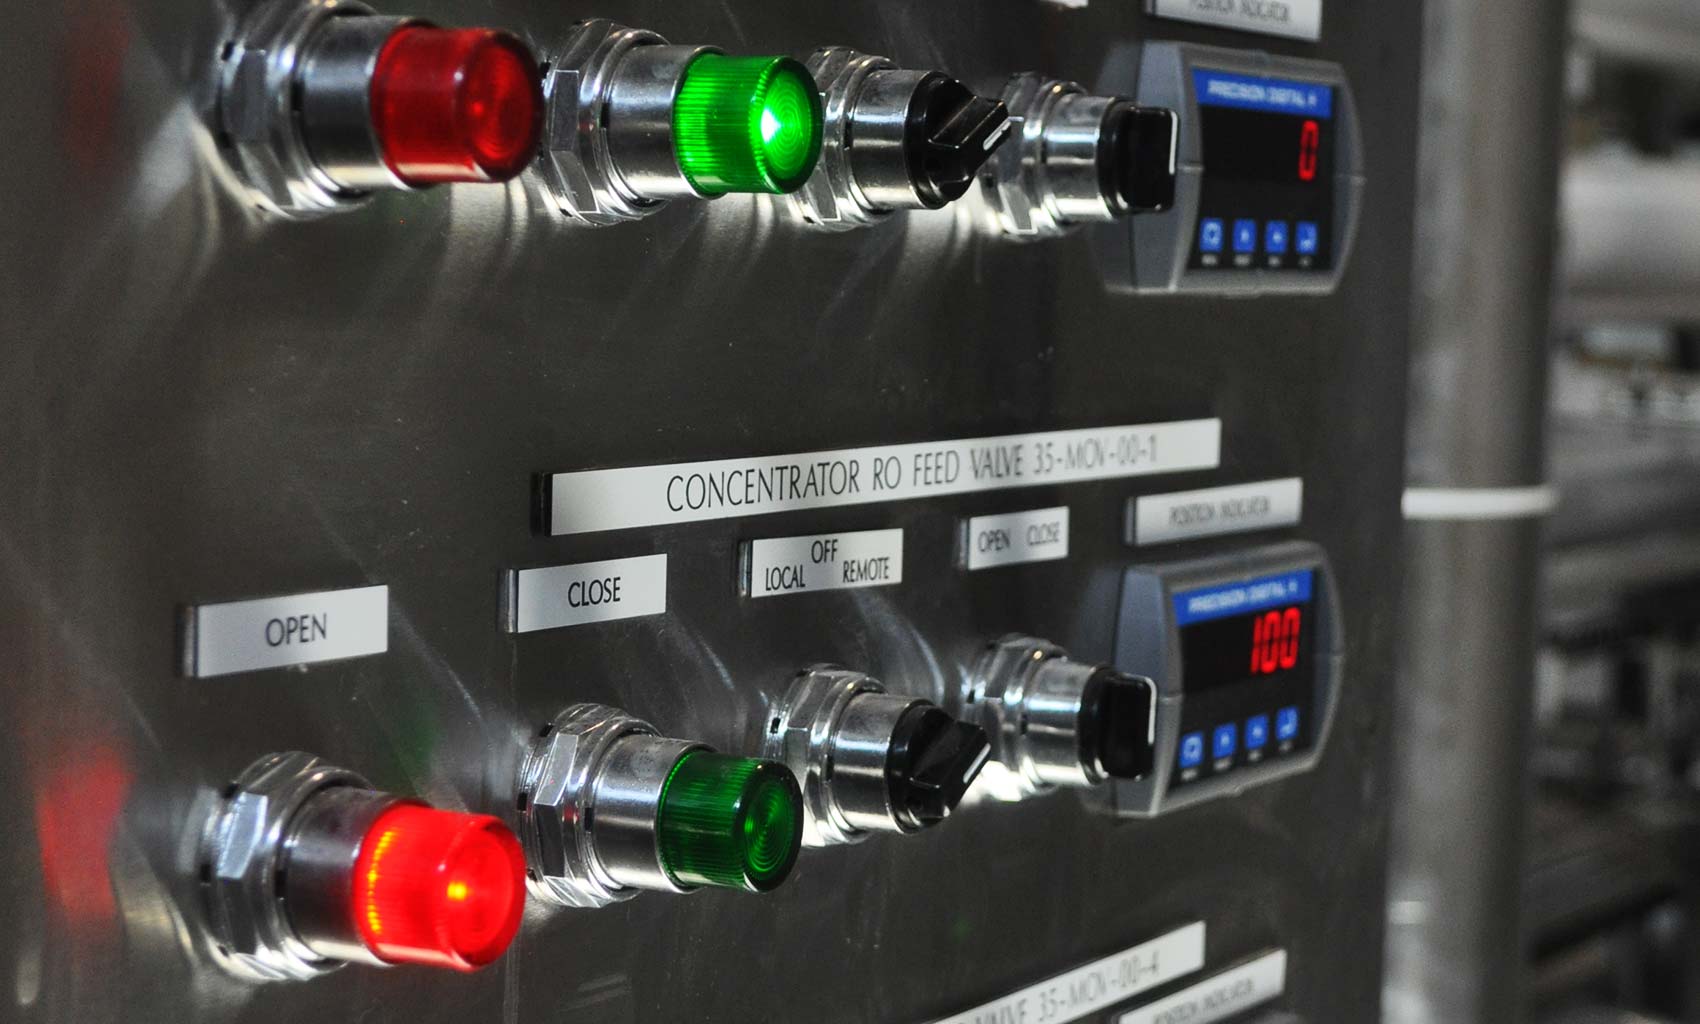 Reverse osmosis train controls and indicators.jpg